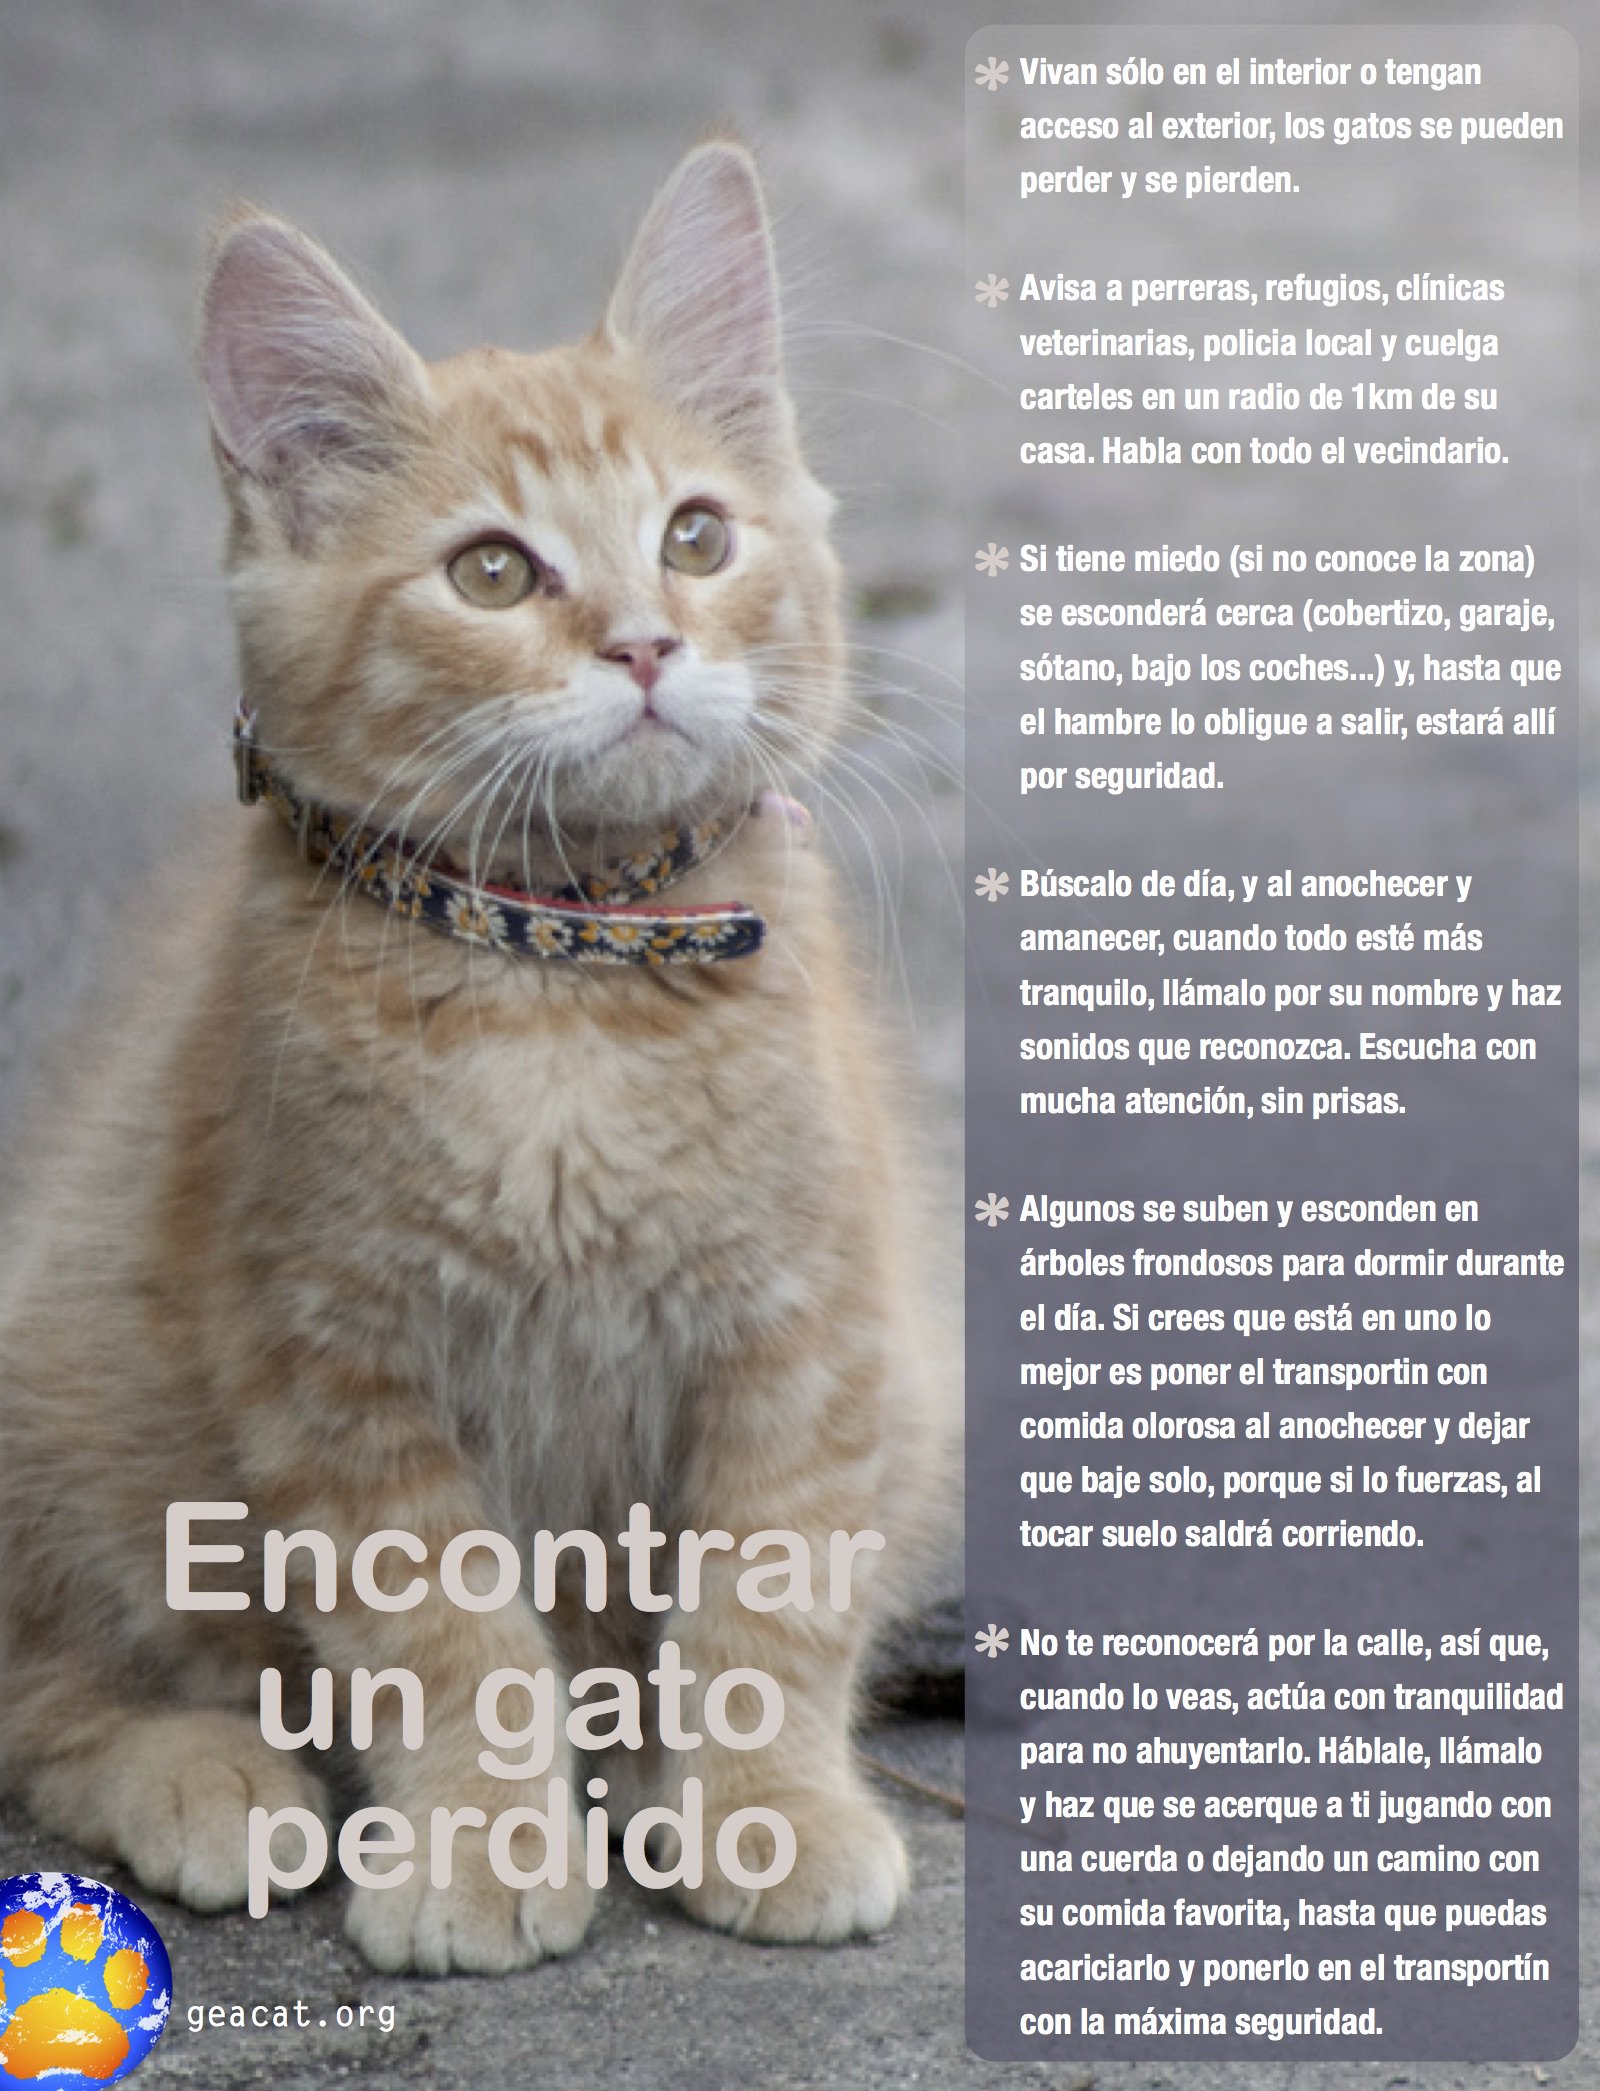 Janice Intervenir Berenjena GEA on Twitter: "🚨 Encontrar un gato perdido 🚨 🐱#Gatos  https://t.co/vYhibLZwGm" / Twitter